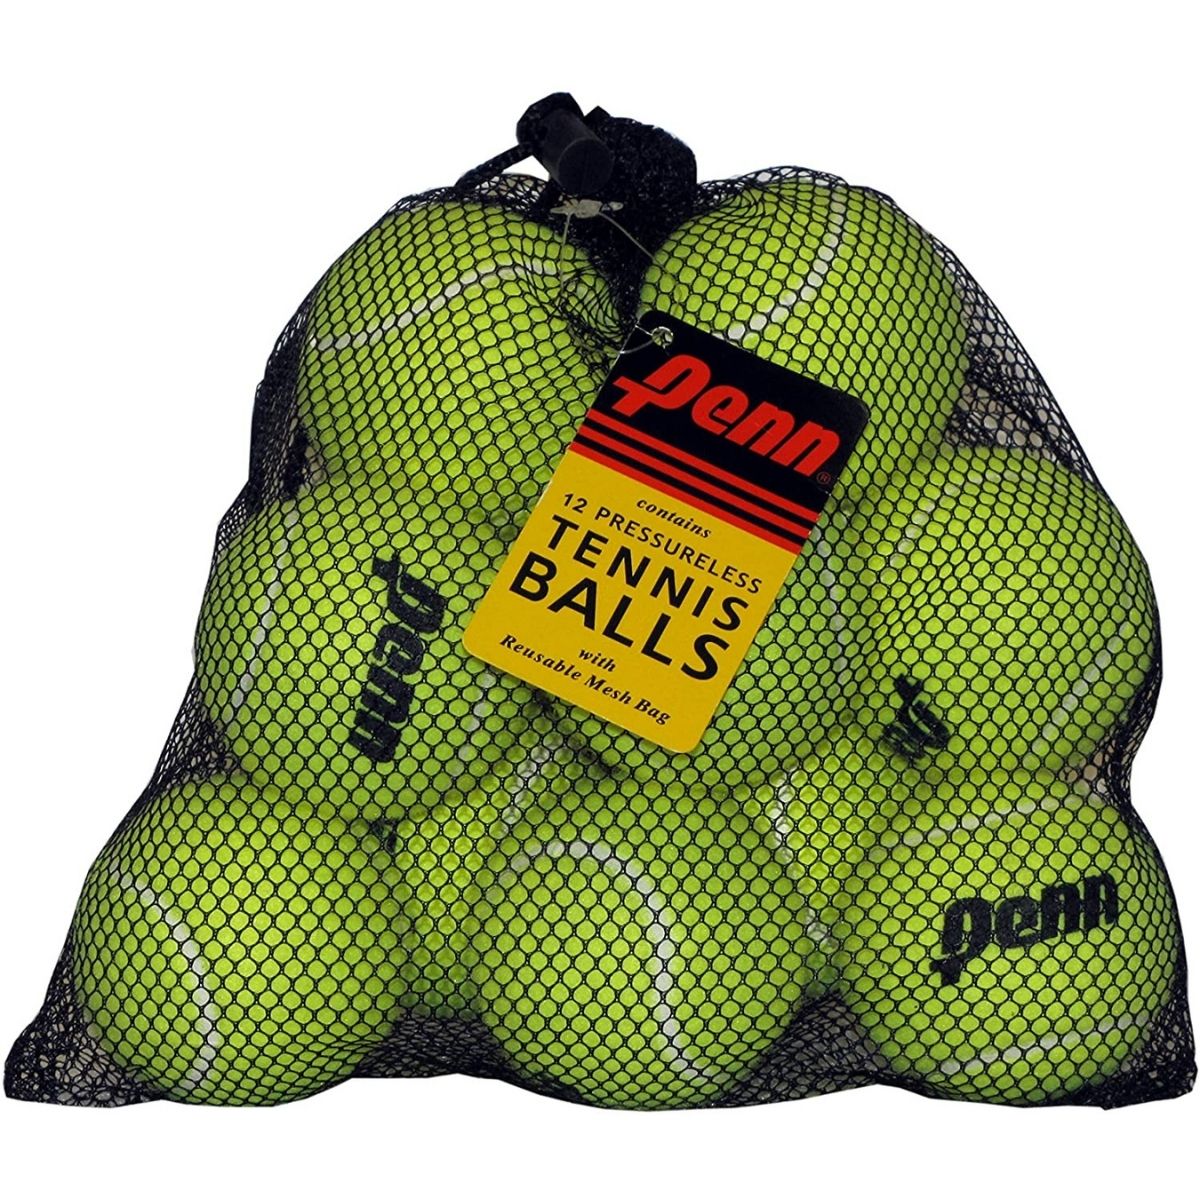 The Best Pressureless Tennis Balls Option: Penn Pressureless Tennis Balls